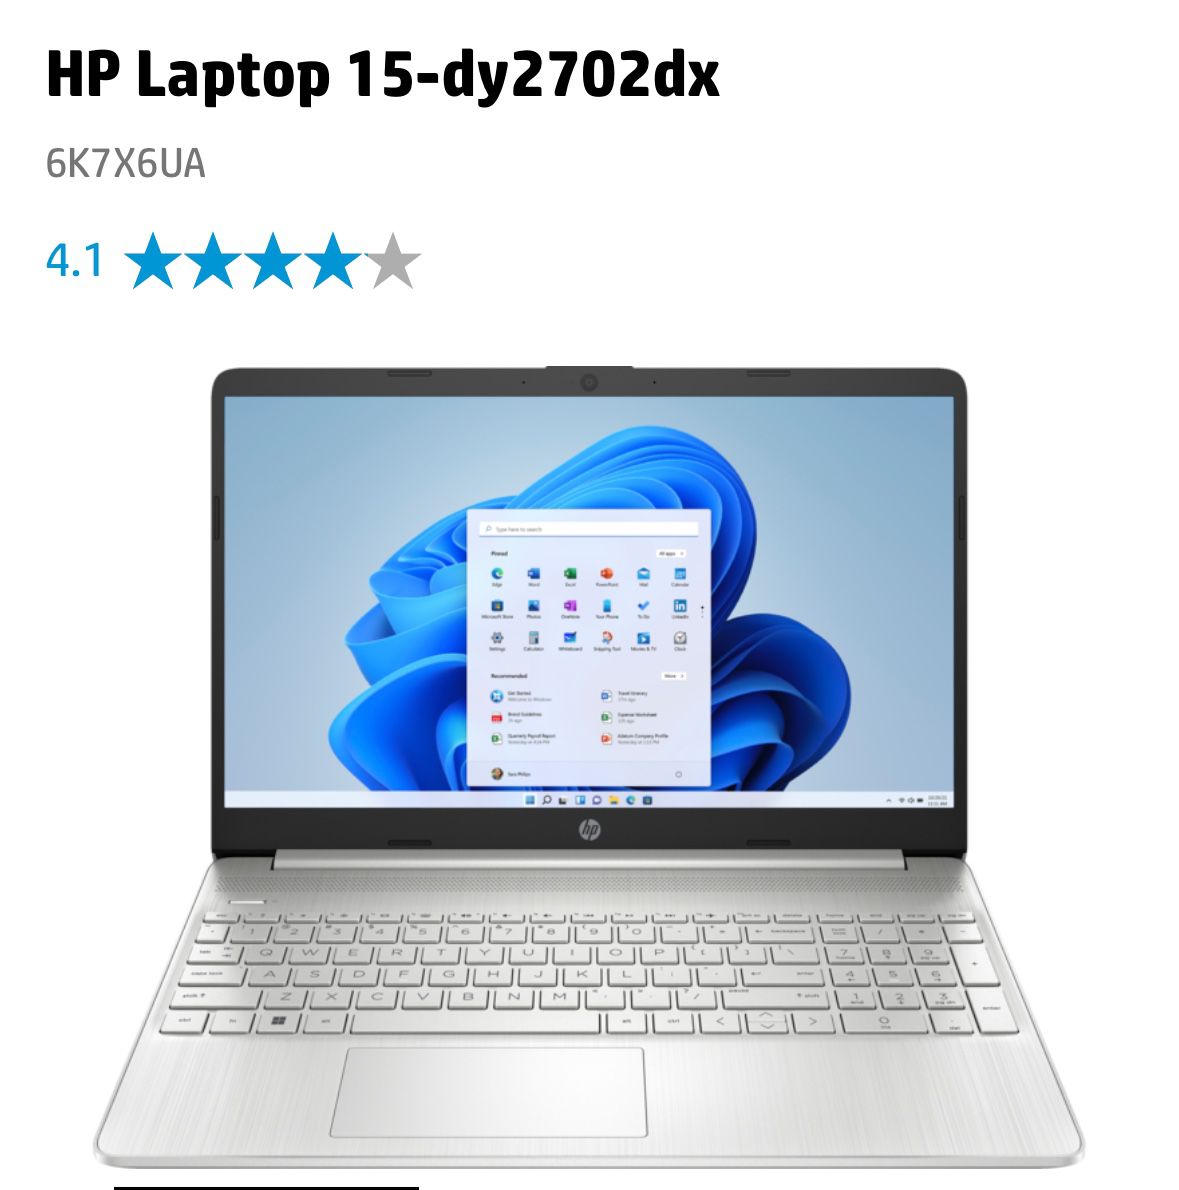 HP 15” Laptop -LIKE NEW!